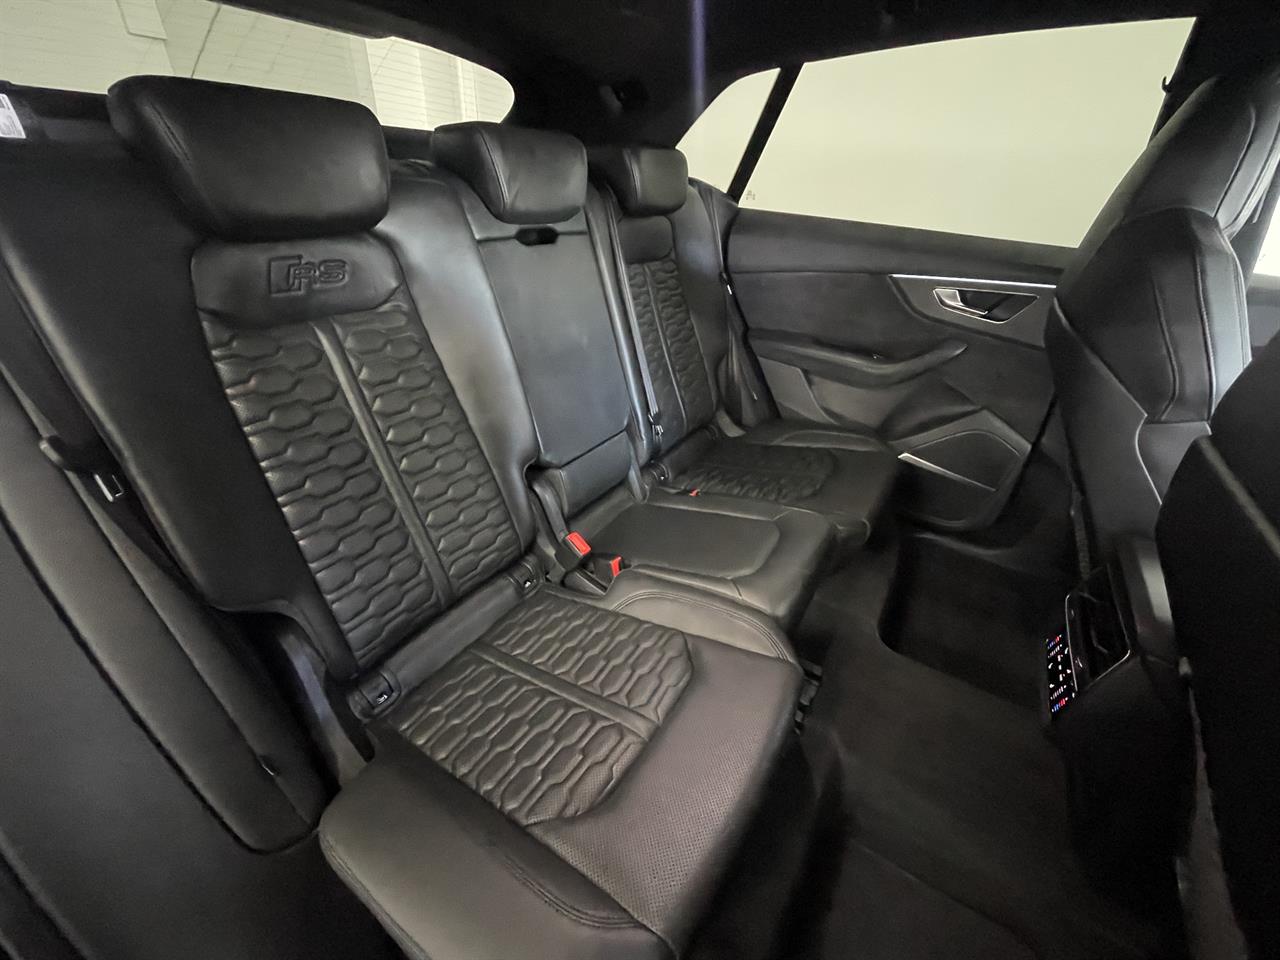 2020 Audi RS Q8 4.0L V8 Petrol 441kW quattro image 9